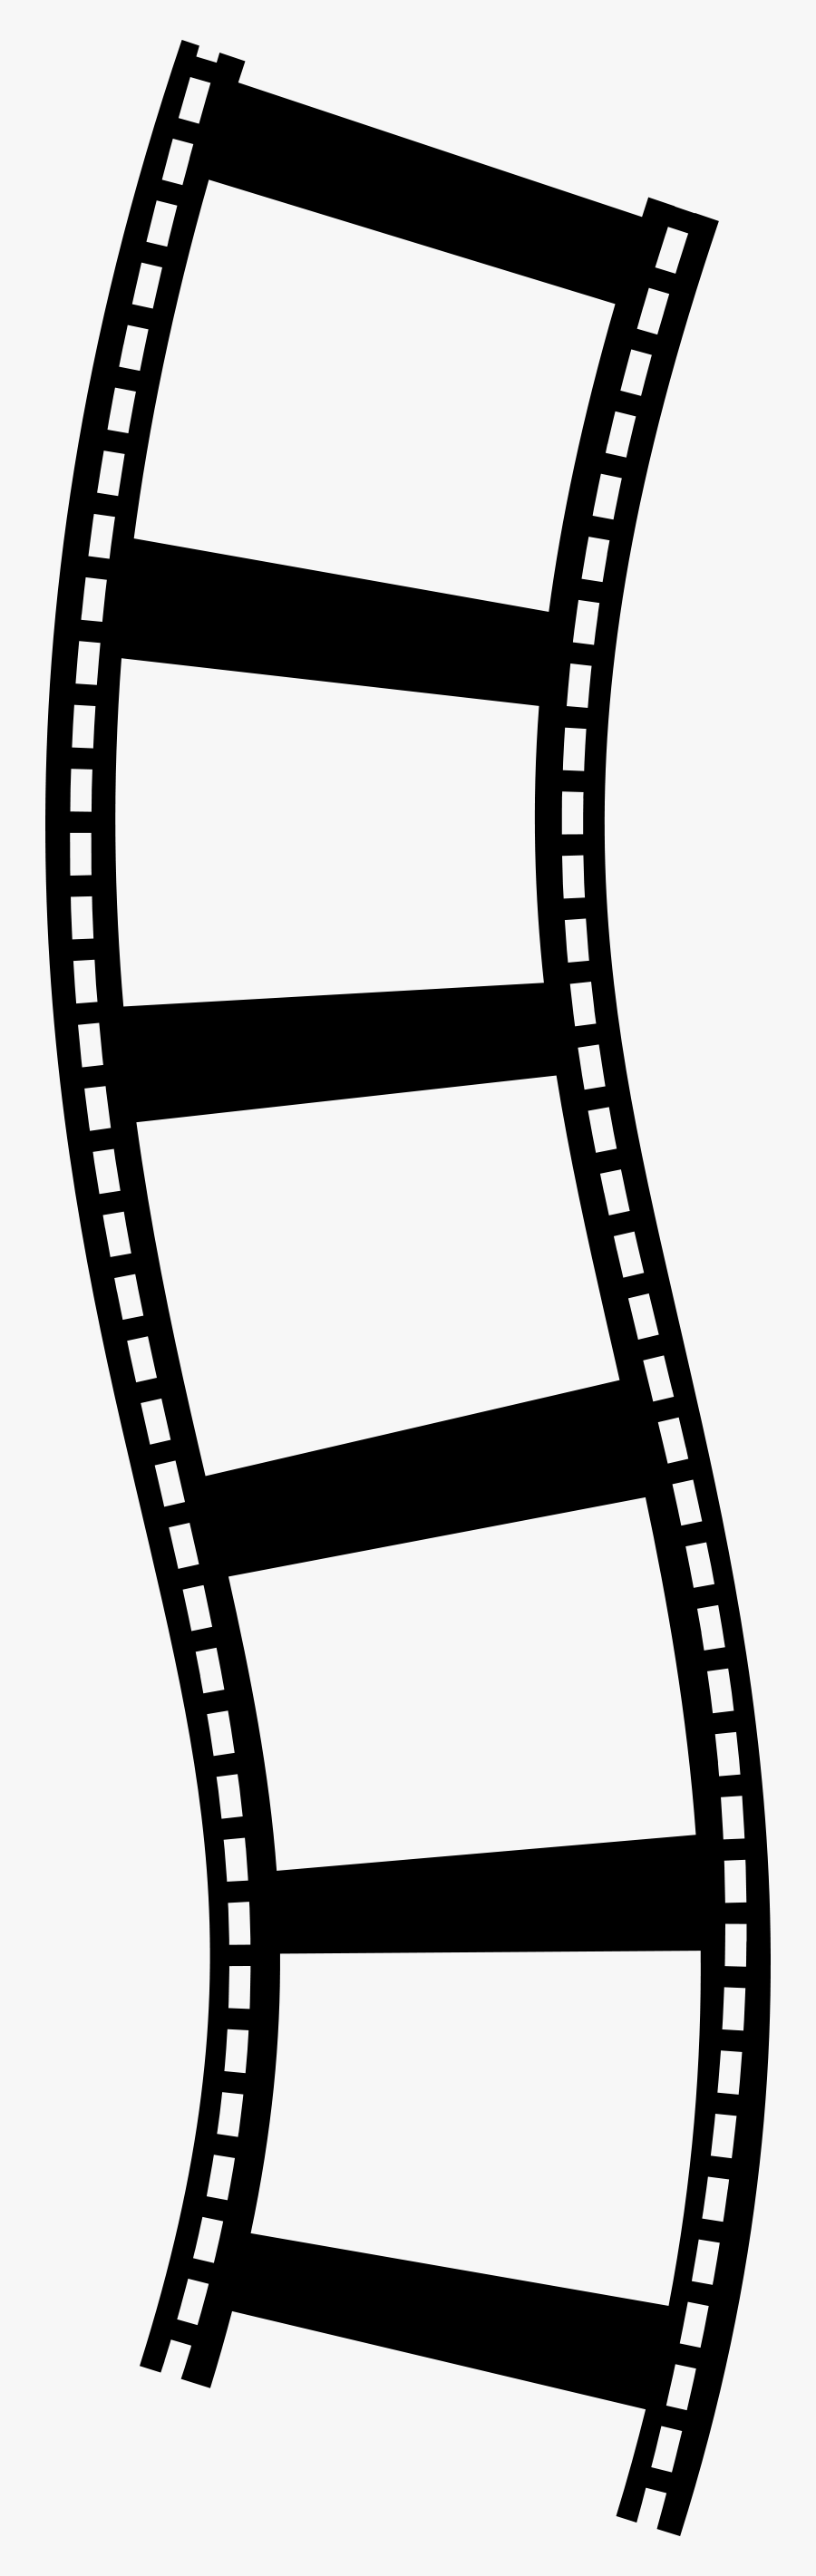 Clipart - Film Strip Border Png, Transparent Clipart